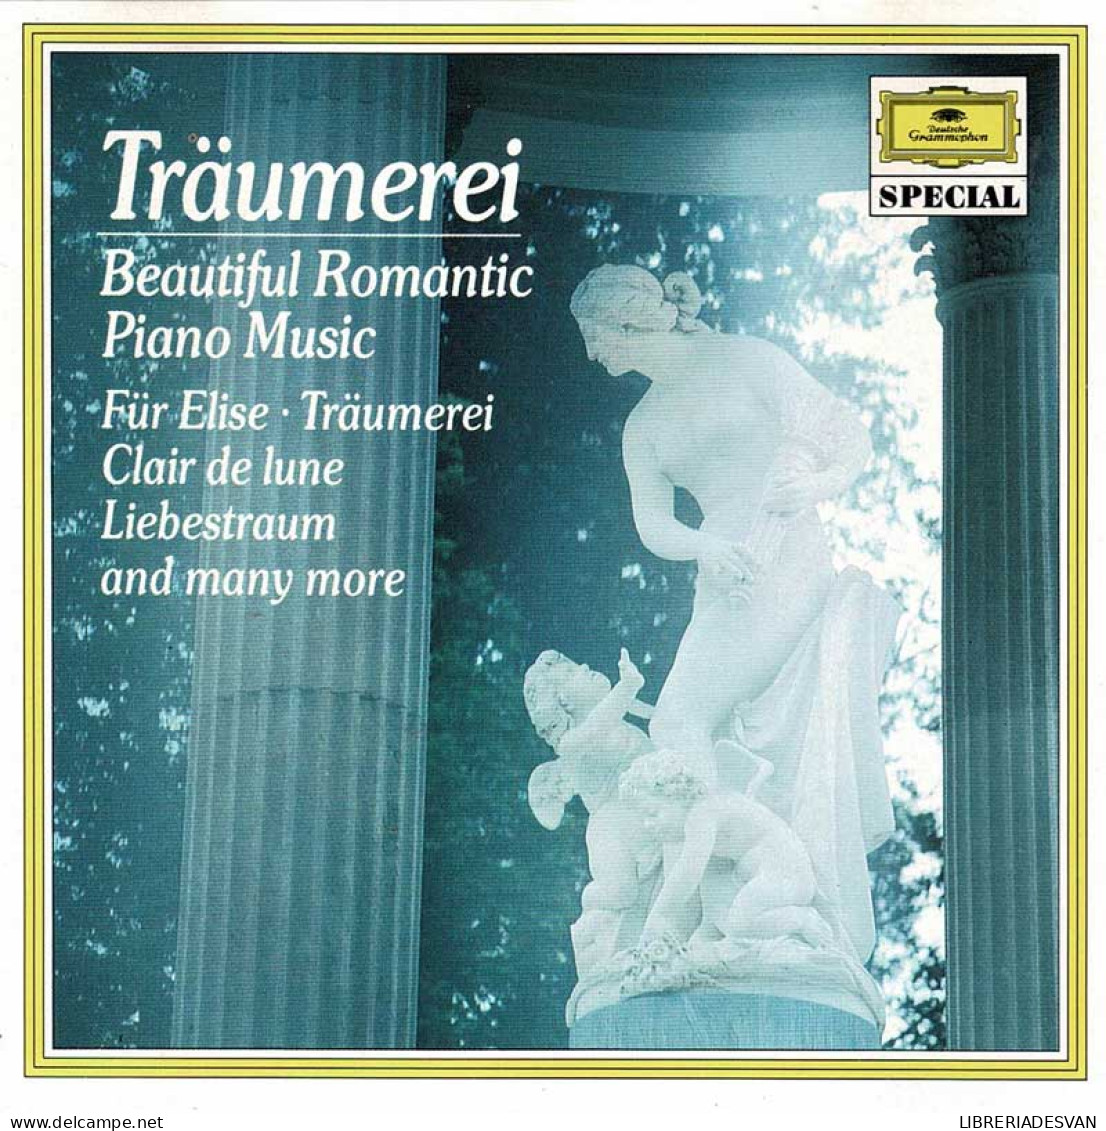 Träumerei. Beautiful Romantic Piano Music. CD - Classique